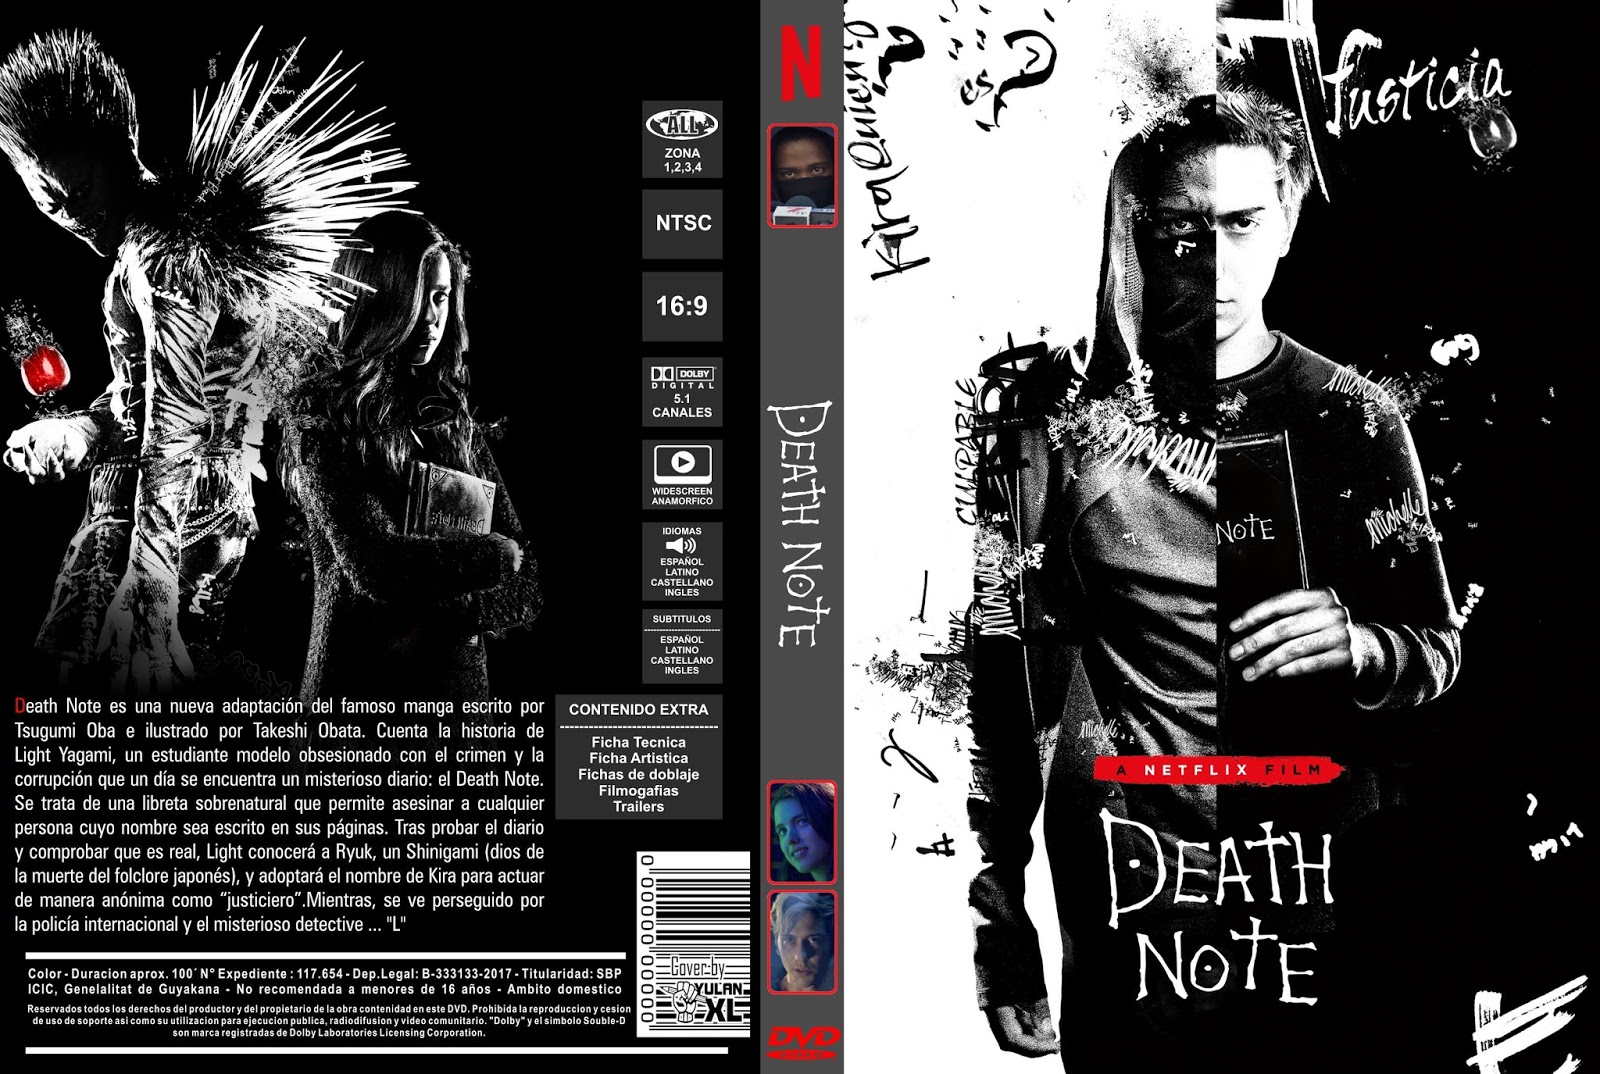 Правила смерти. Тетрадь смерти фильм 2017 Постер. Death Note обложка. Death Note афиша. Death Note 2017 Постер.